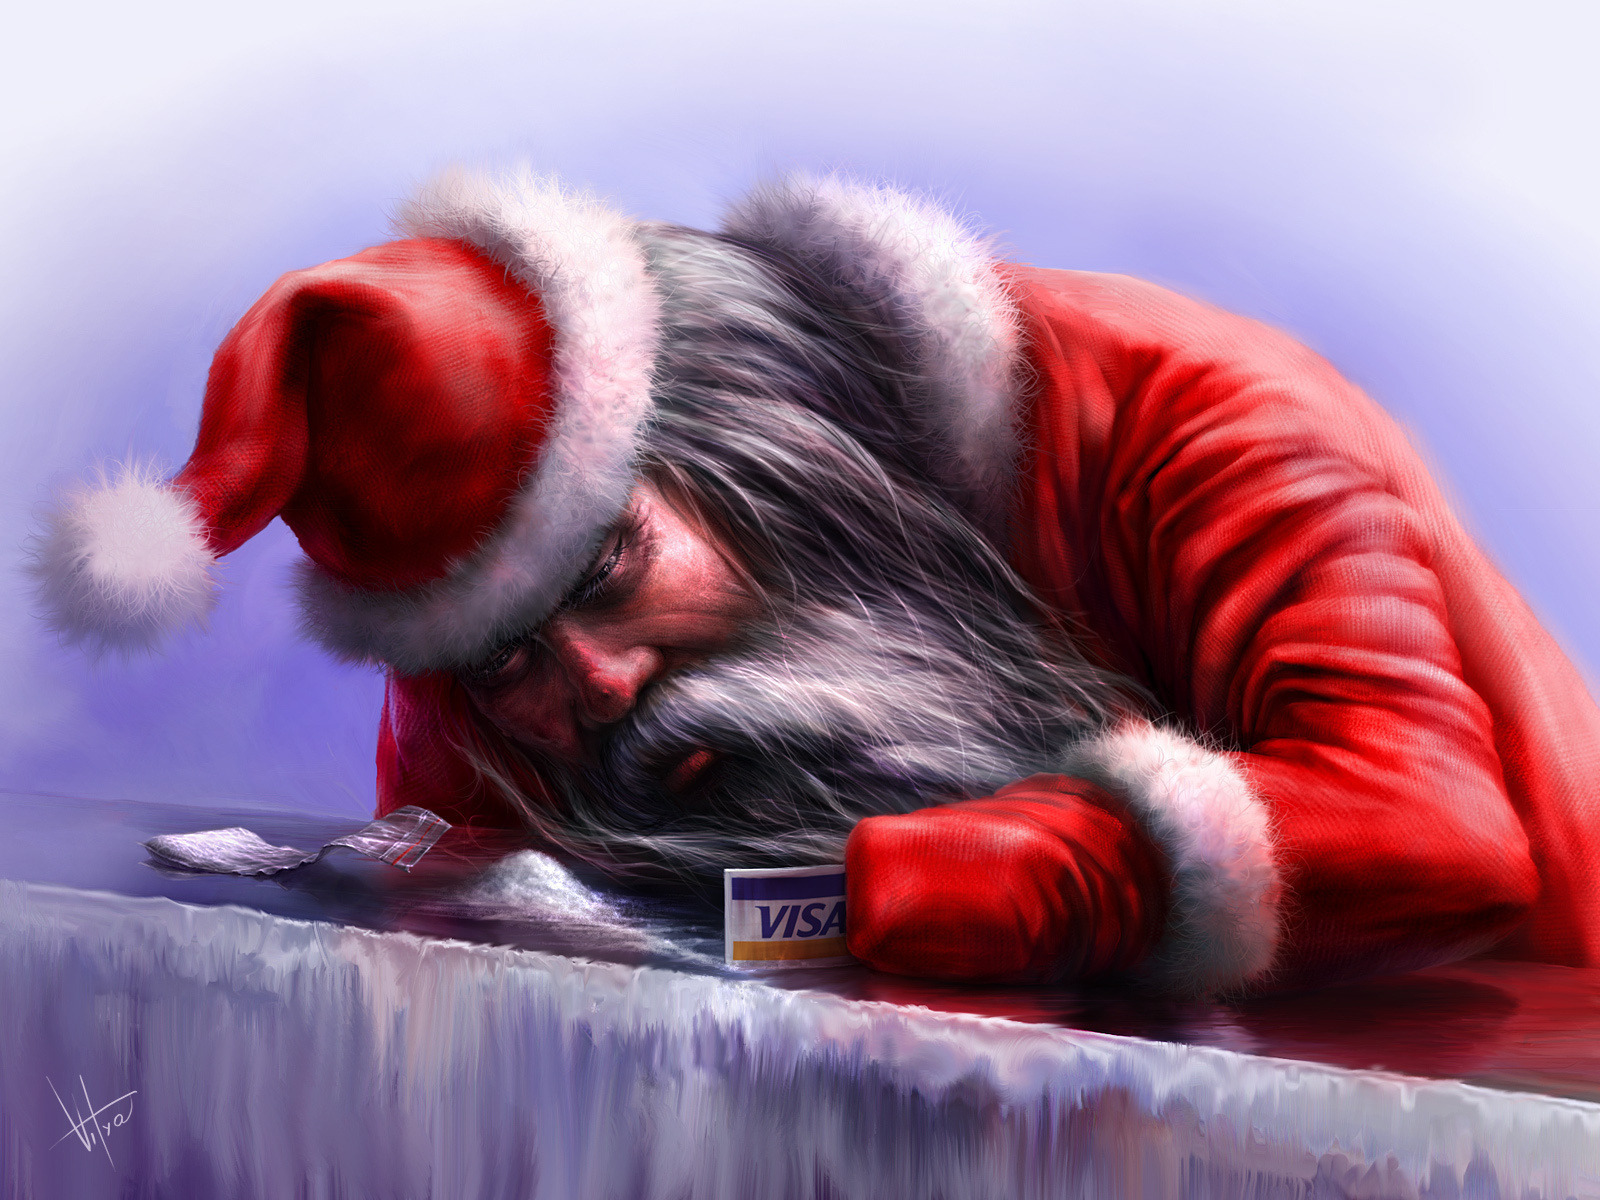 3d обои Дед мороз нюхает снег собирая его карточкой виза как кокаин (VISA)  бренд # 21148